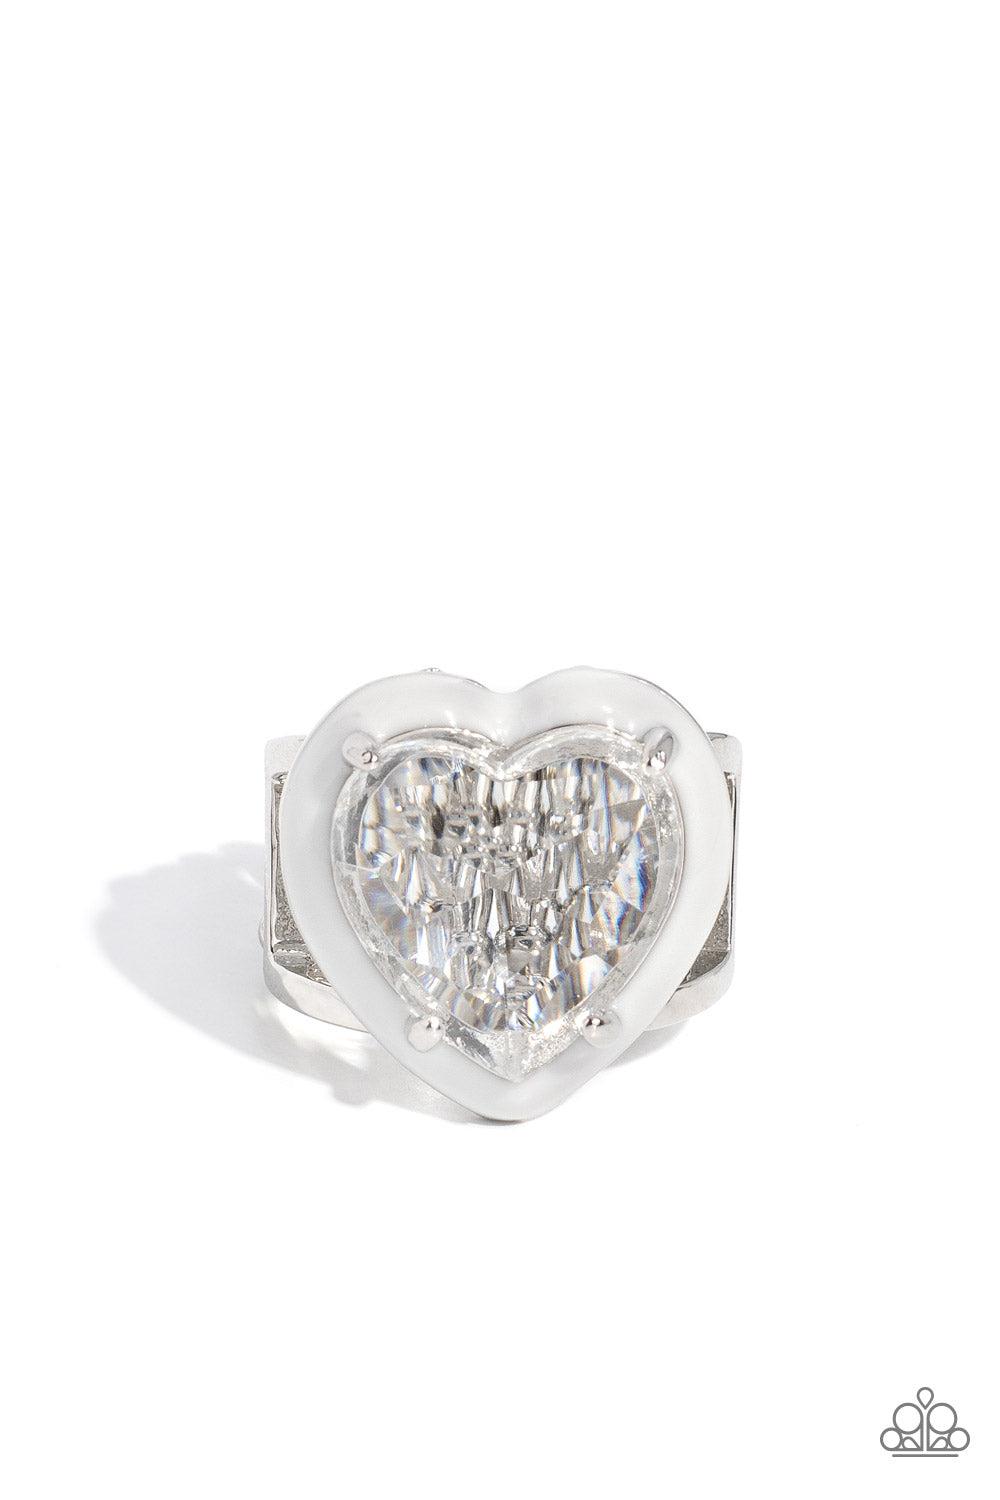 Hallmark Heart White Rhinestone Heart Ring - Paparazzi Accessories- lightbox - CarasShop.com - $5 Jewelry by Cara Jewels